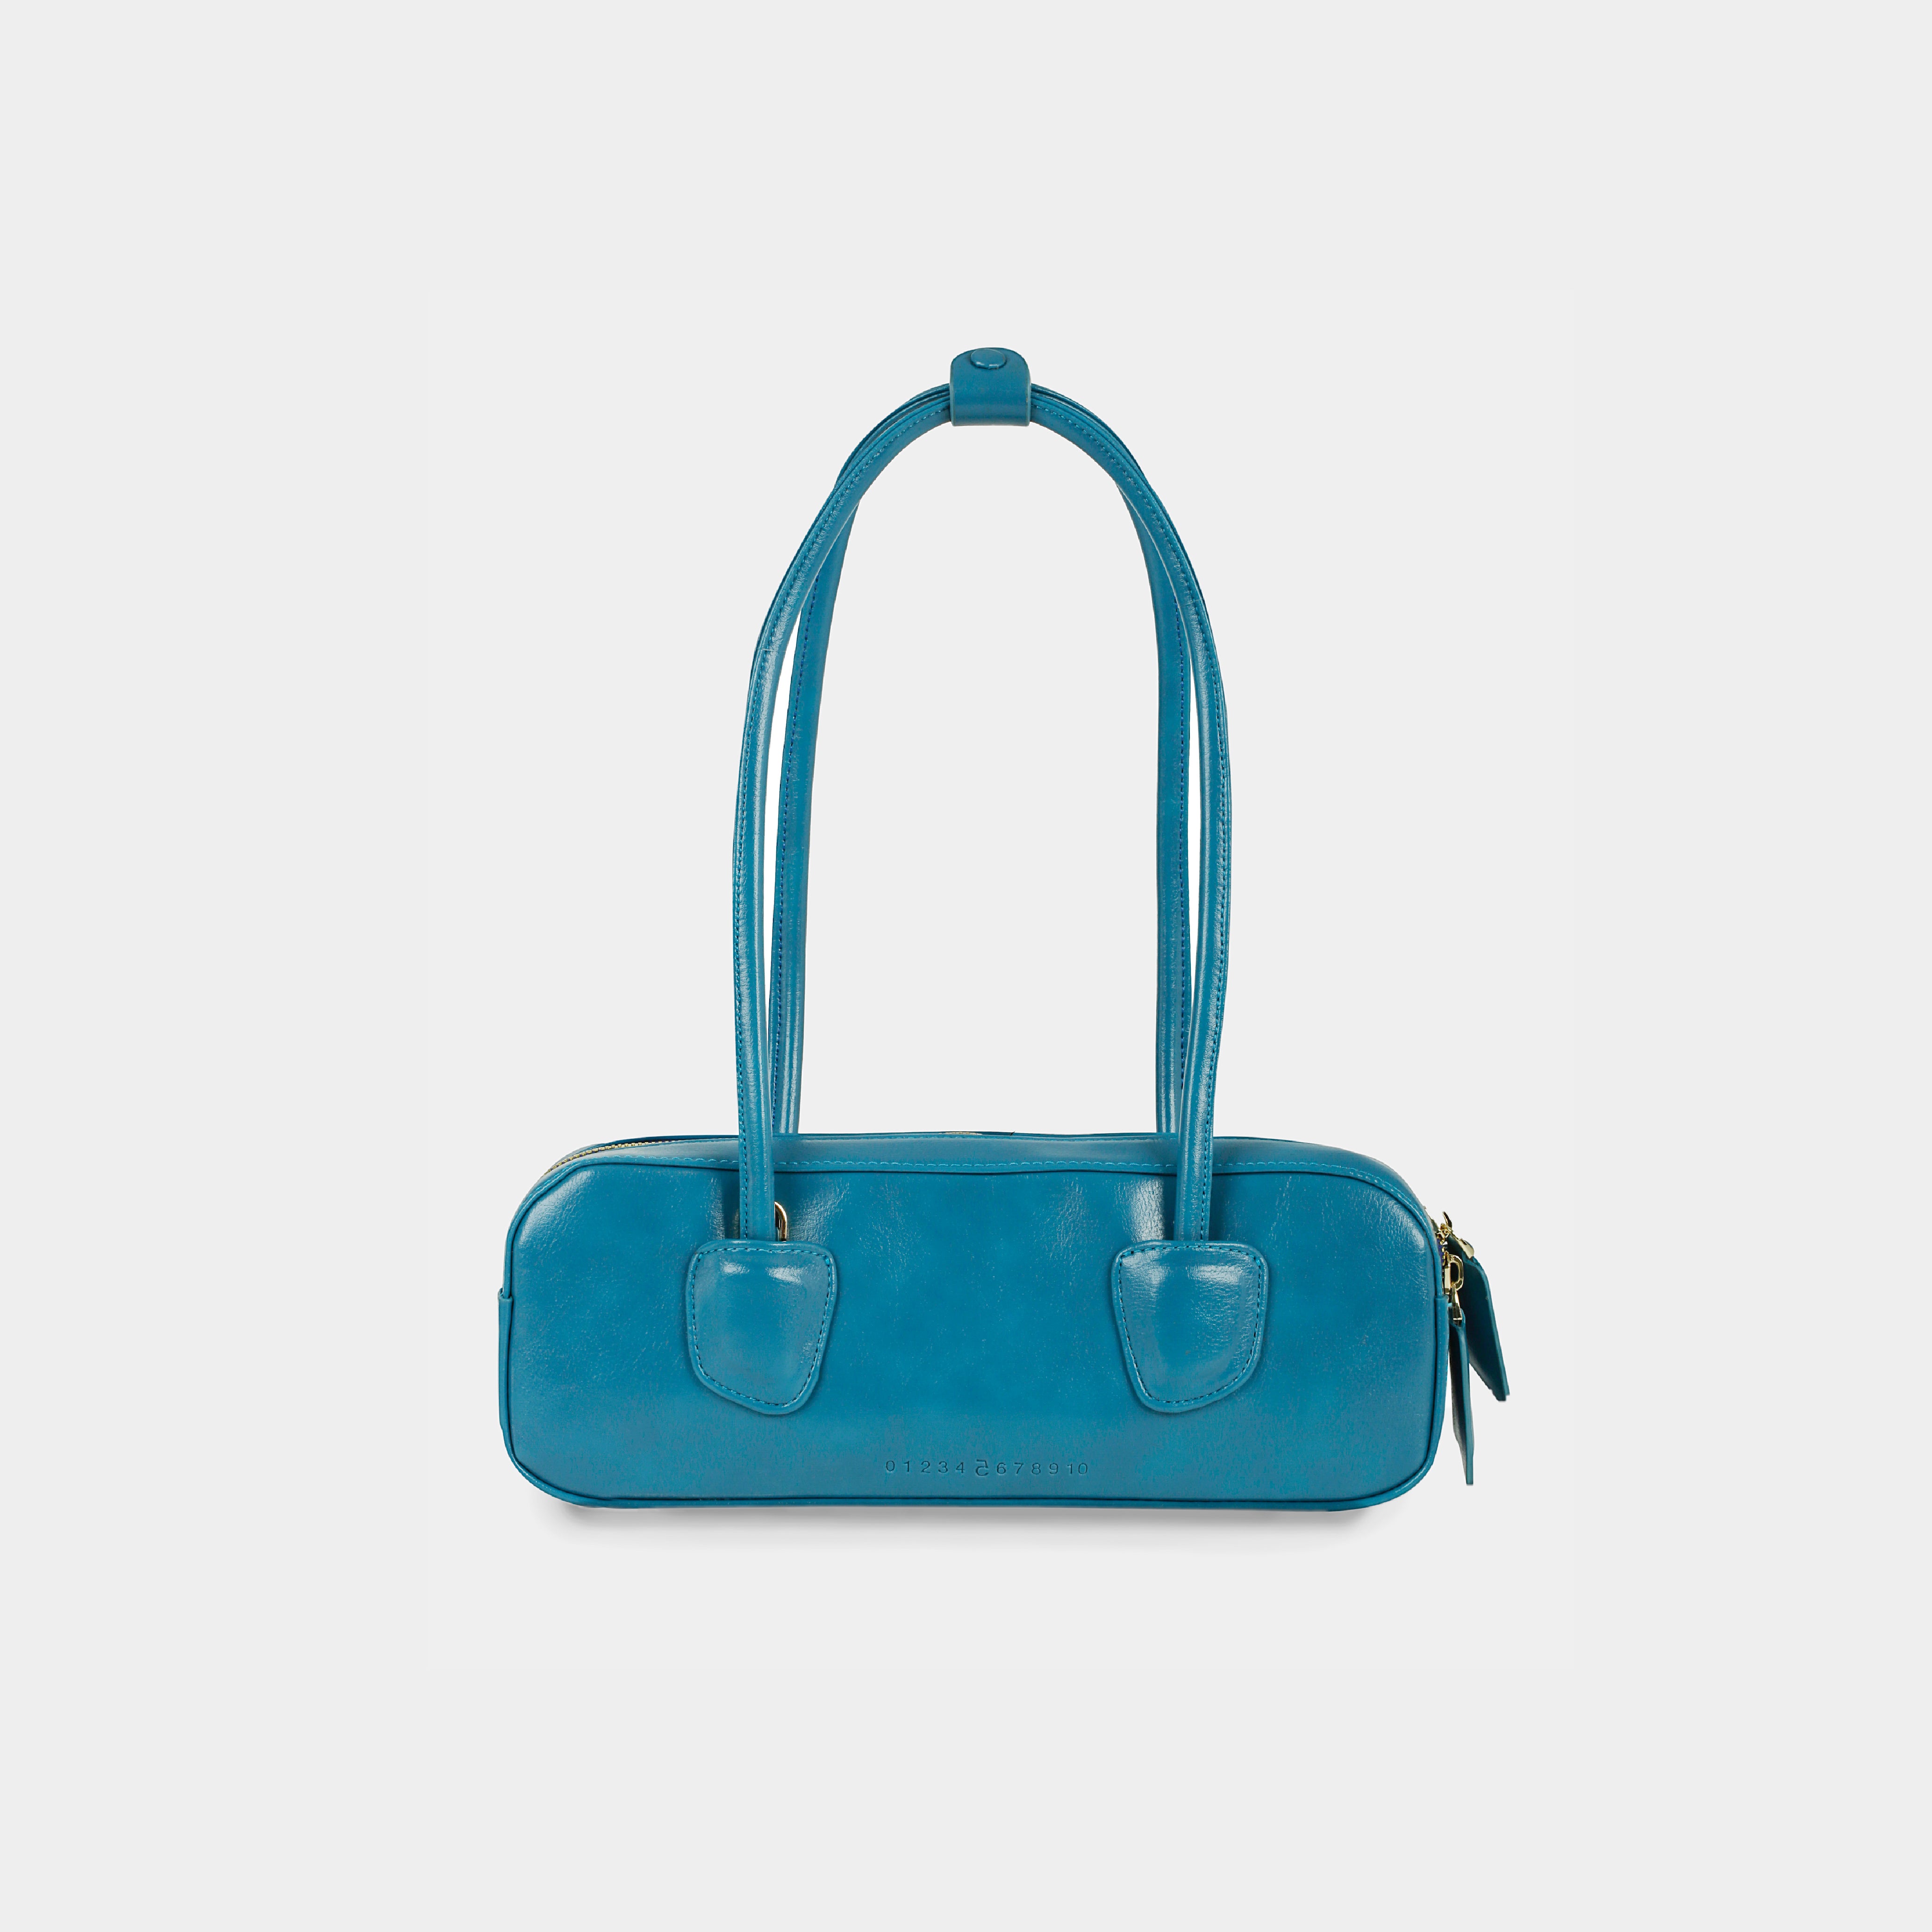 BREAKING bag in blue color